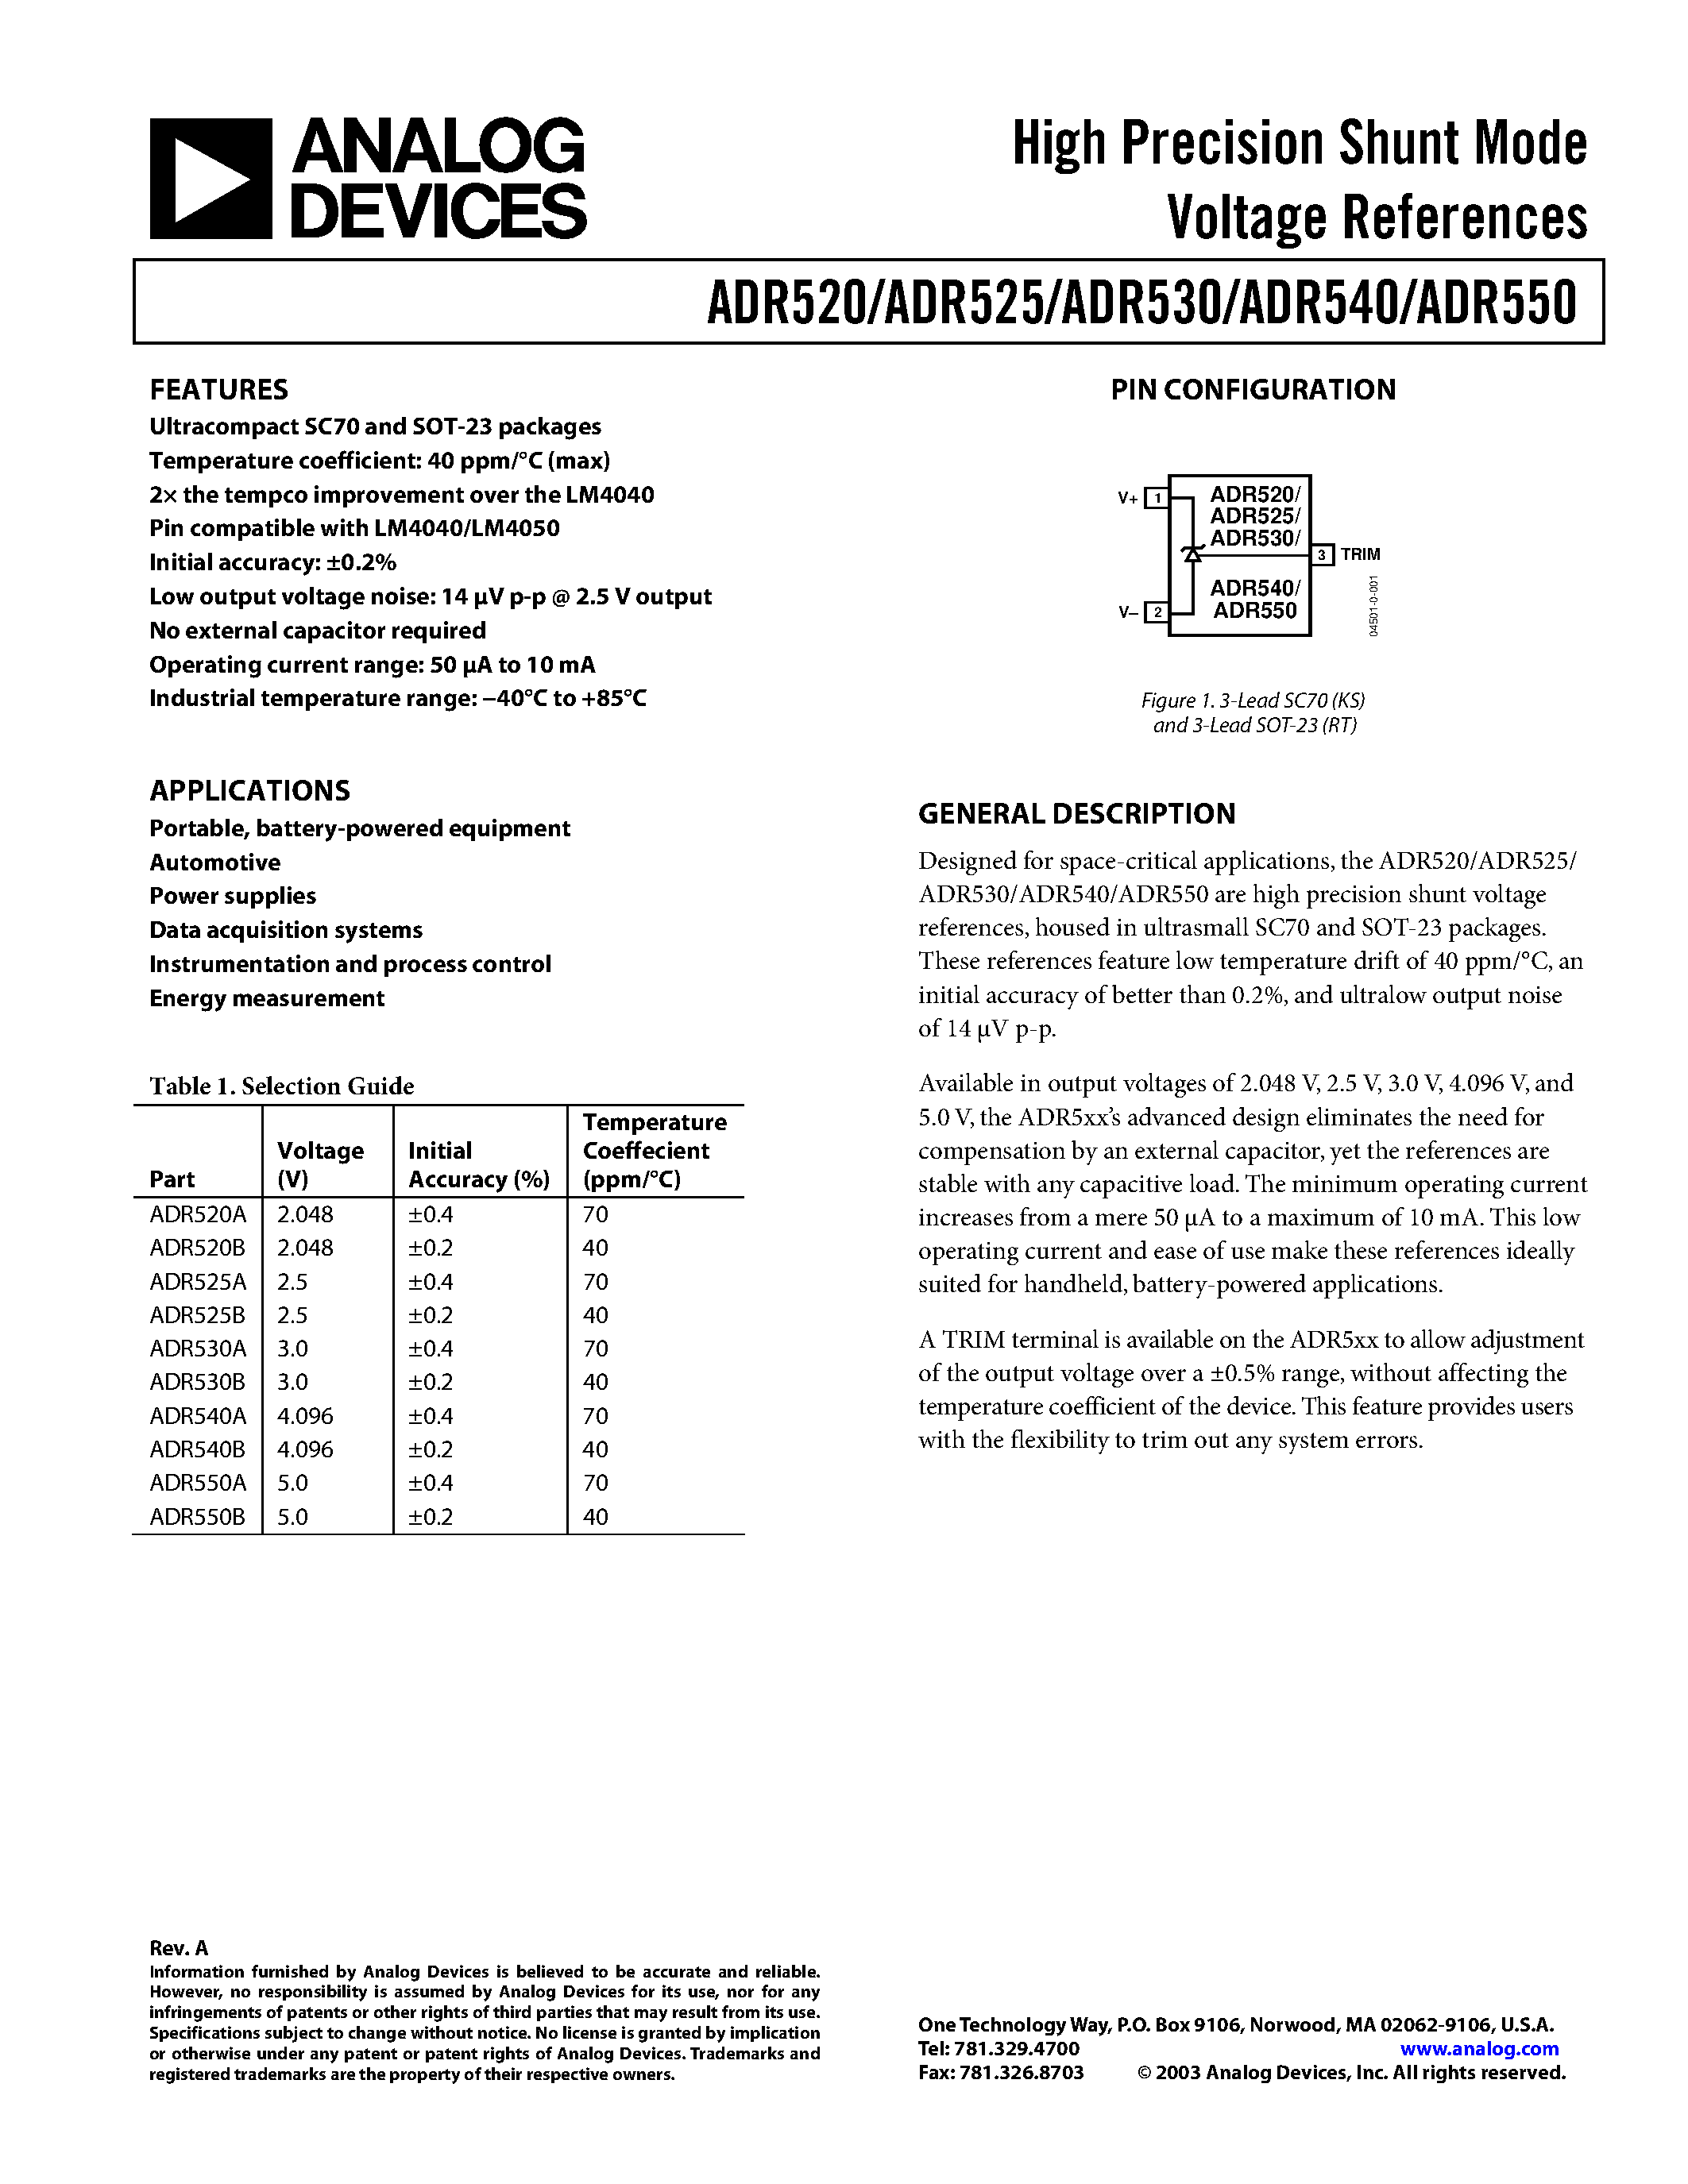 Даташит ADR530BRT-R2 - High Precision Shunt Mode Voltage References страница 1